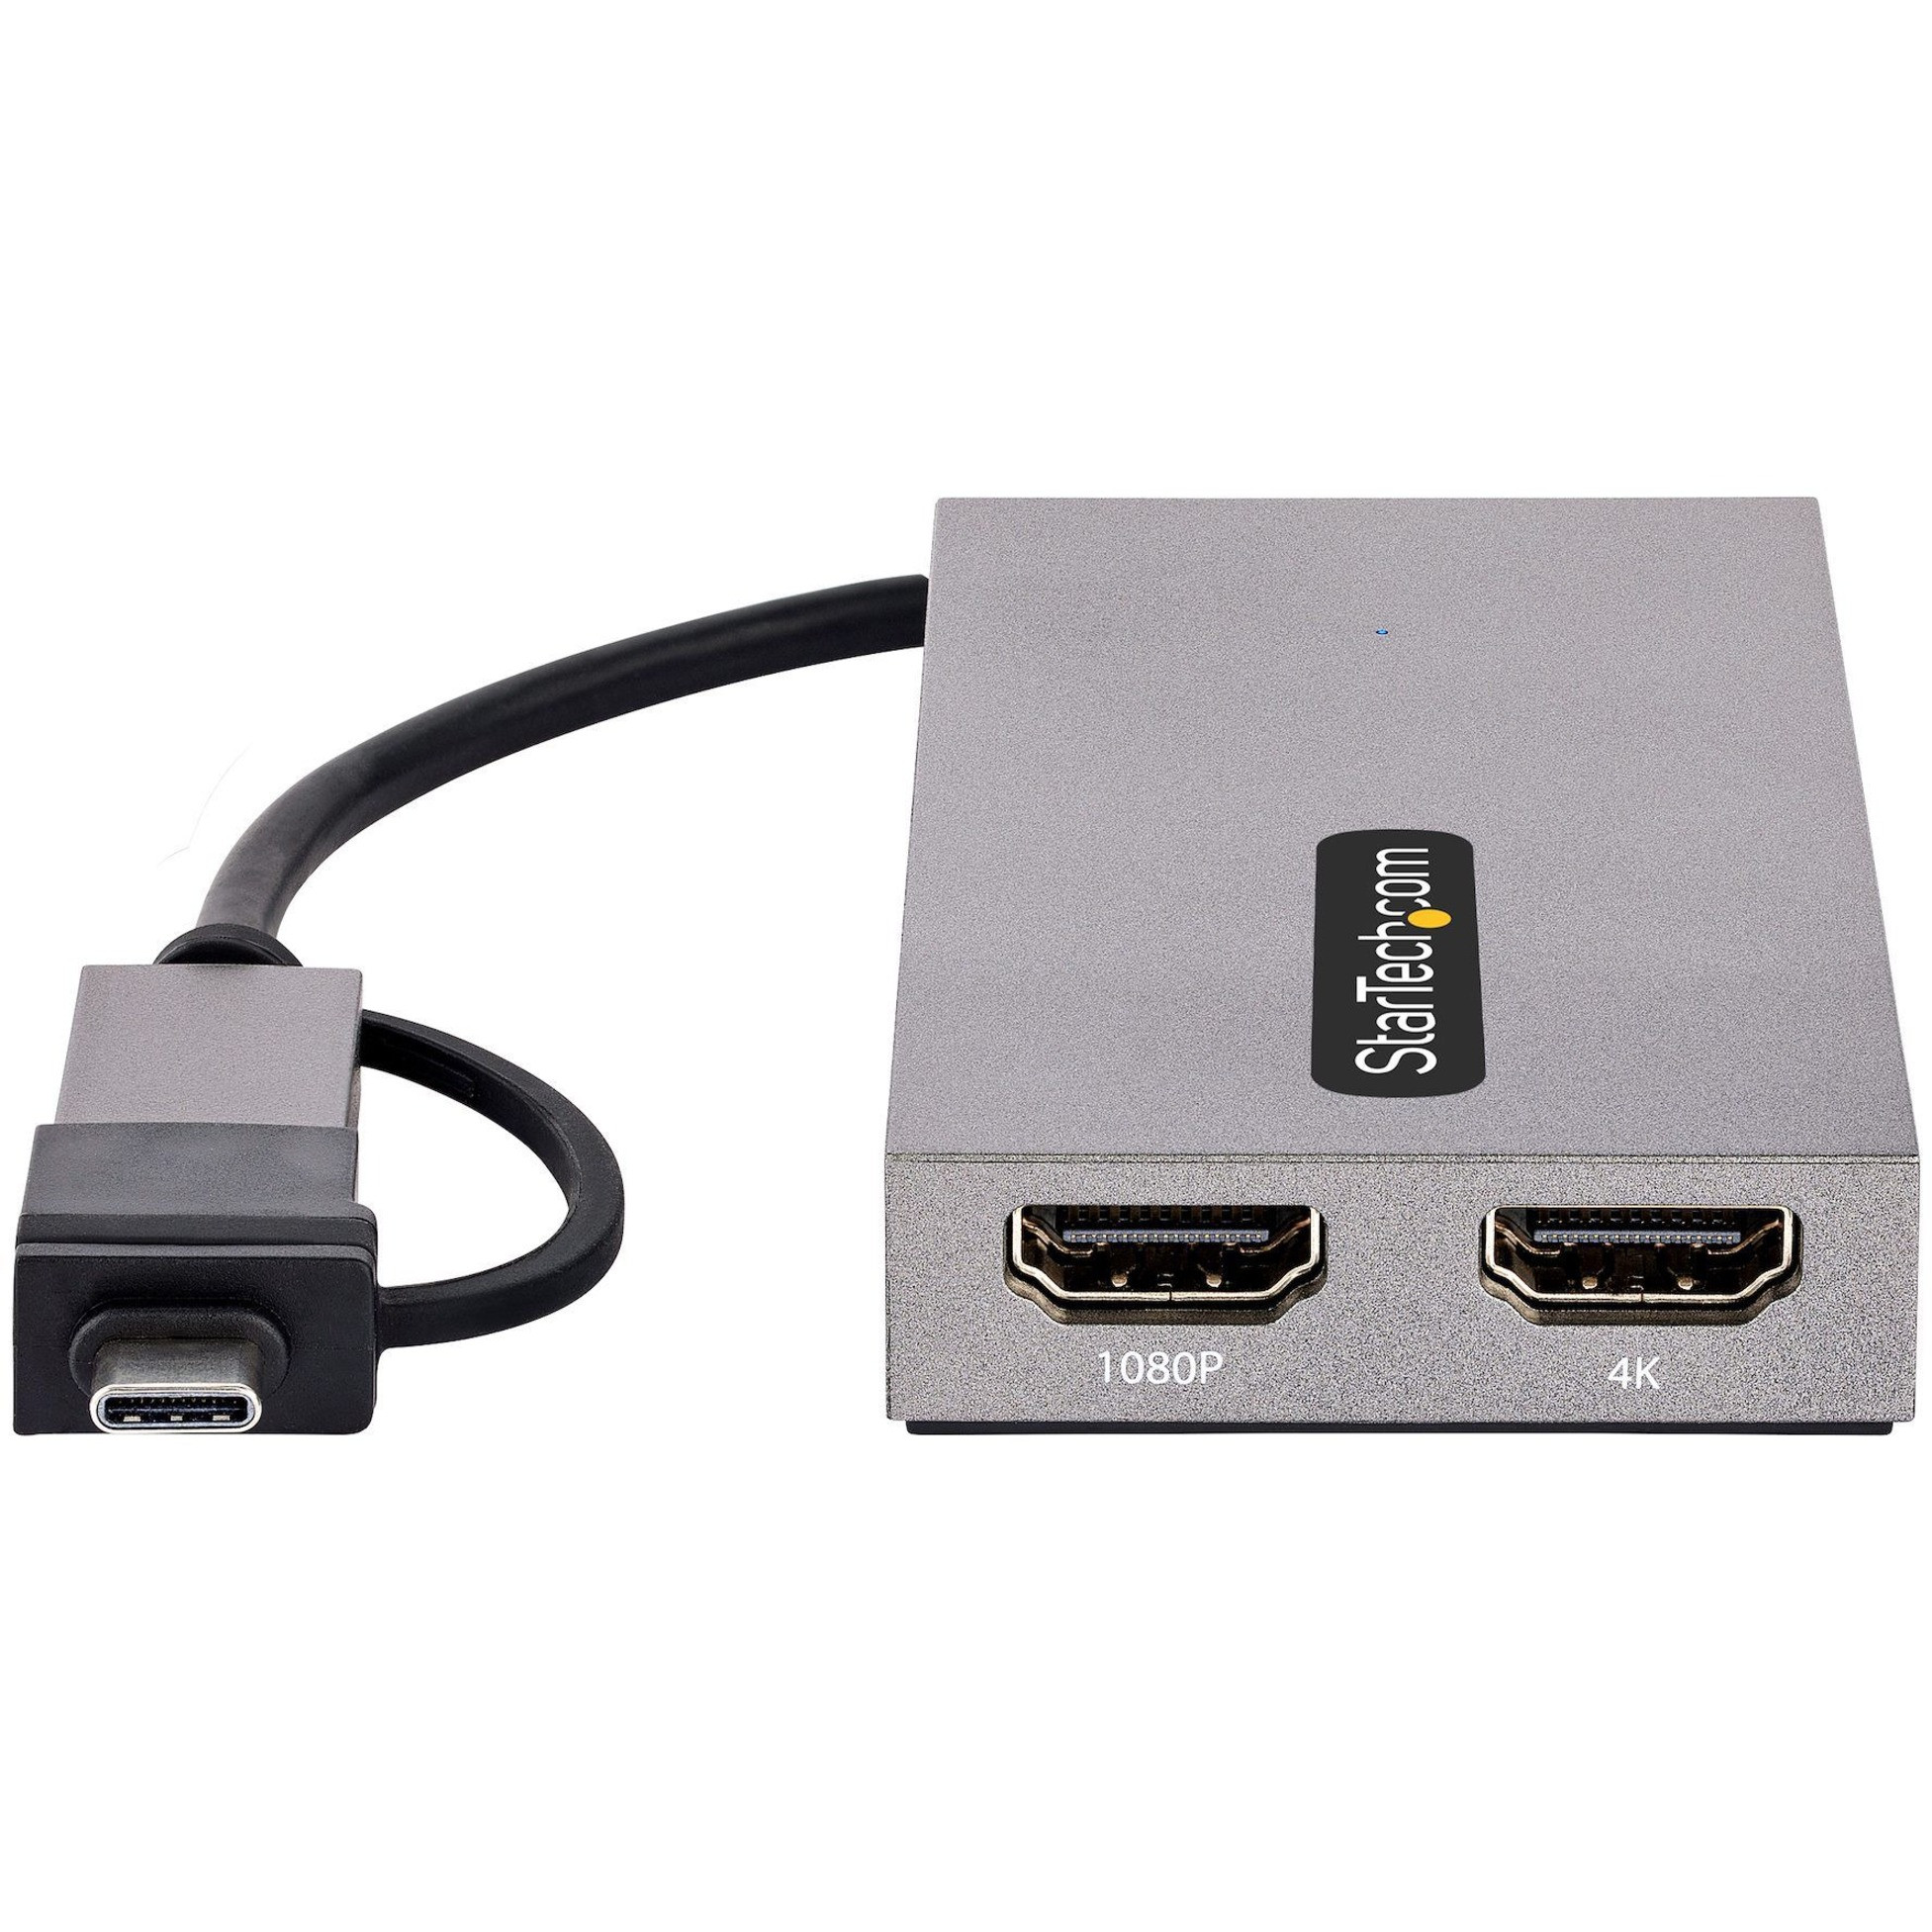 antage regering aspekt Startech .com USB to Dual HDMI Adapter, USB A/C to 2x HDMI Displays (1x  4K30, 1x 1080p), USB 3.0 to HDMI Converter, 4in/11cm Cable, Win/Mac...  107B-USB-HDMI - Corporate Armor